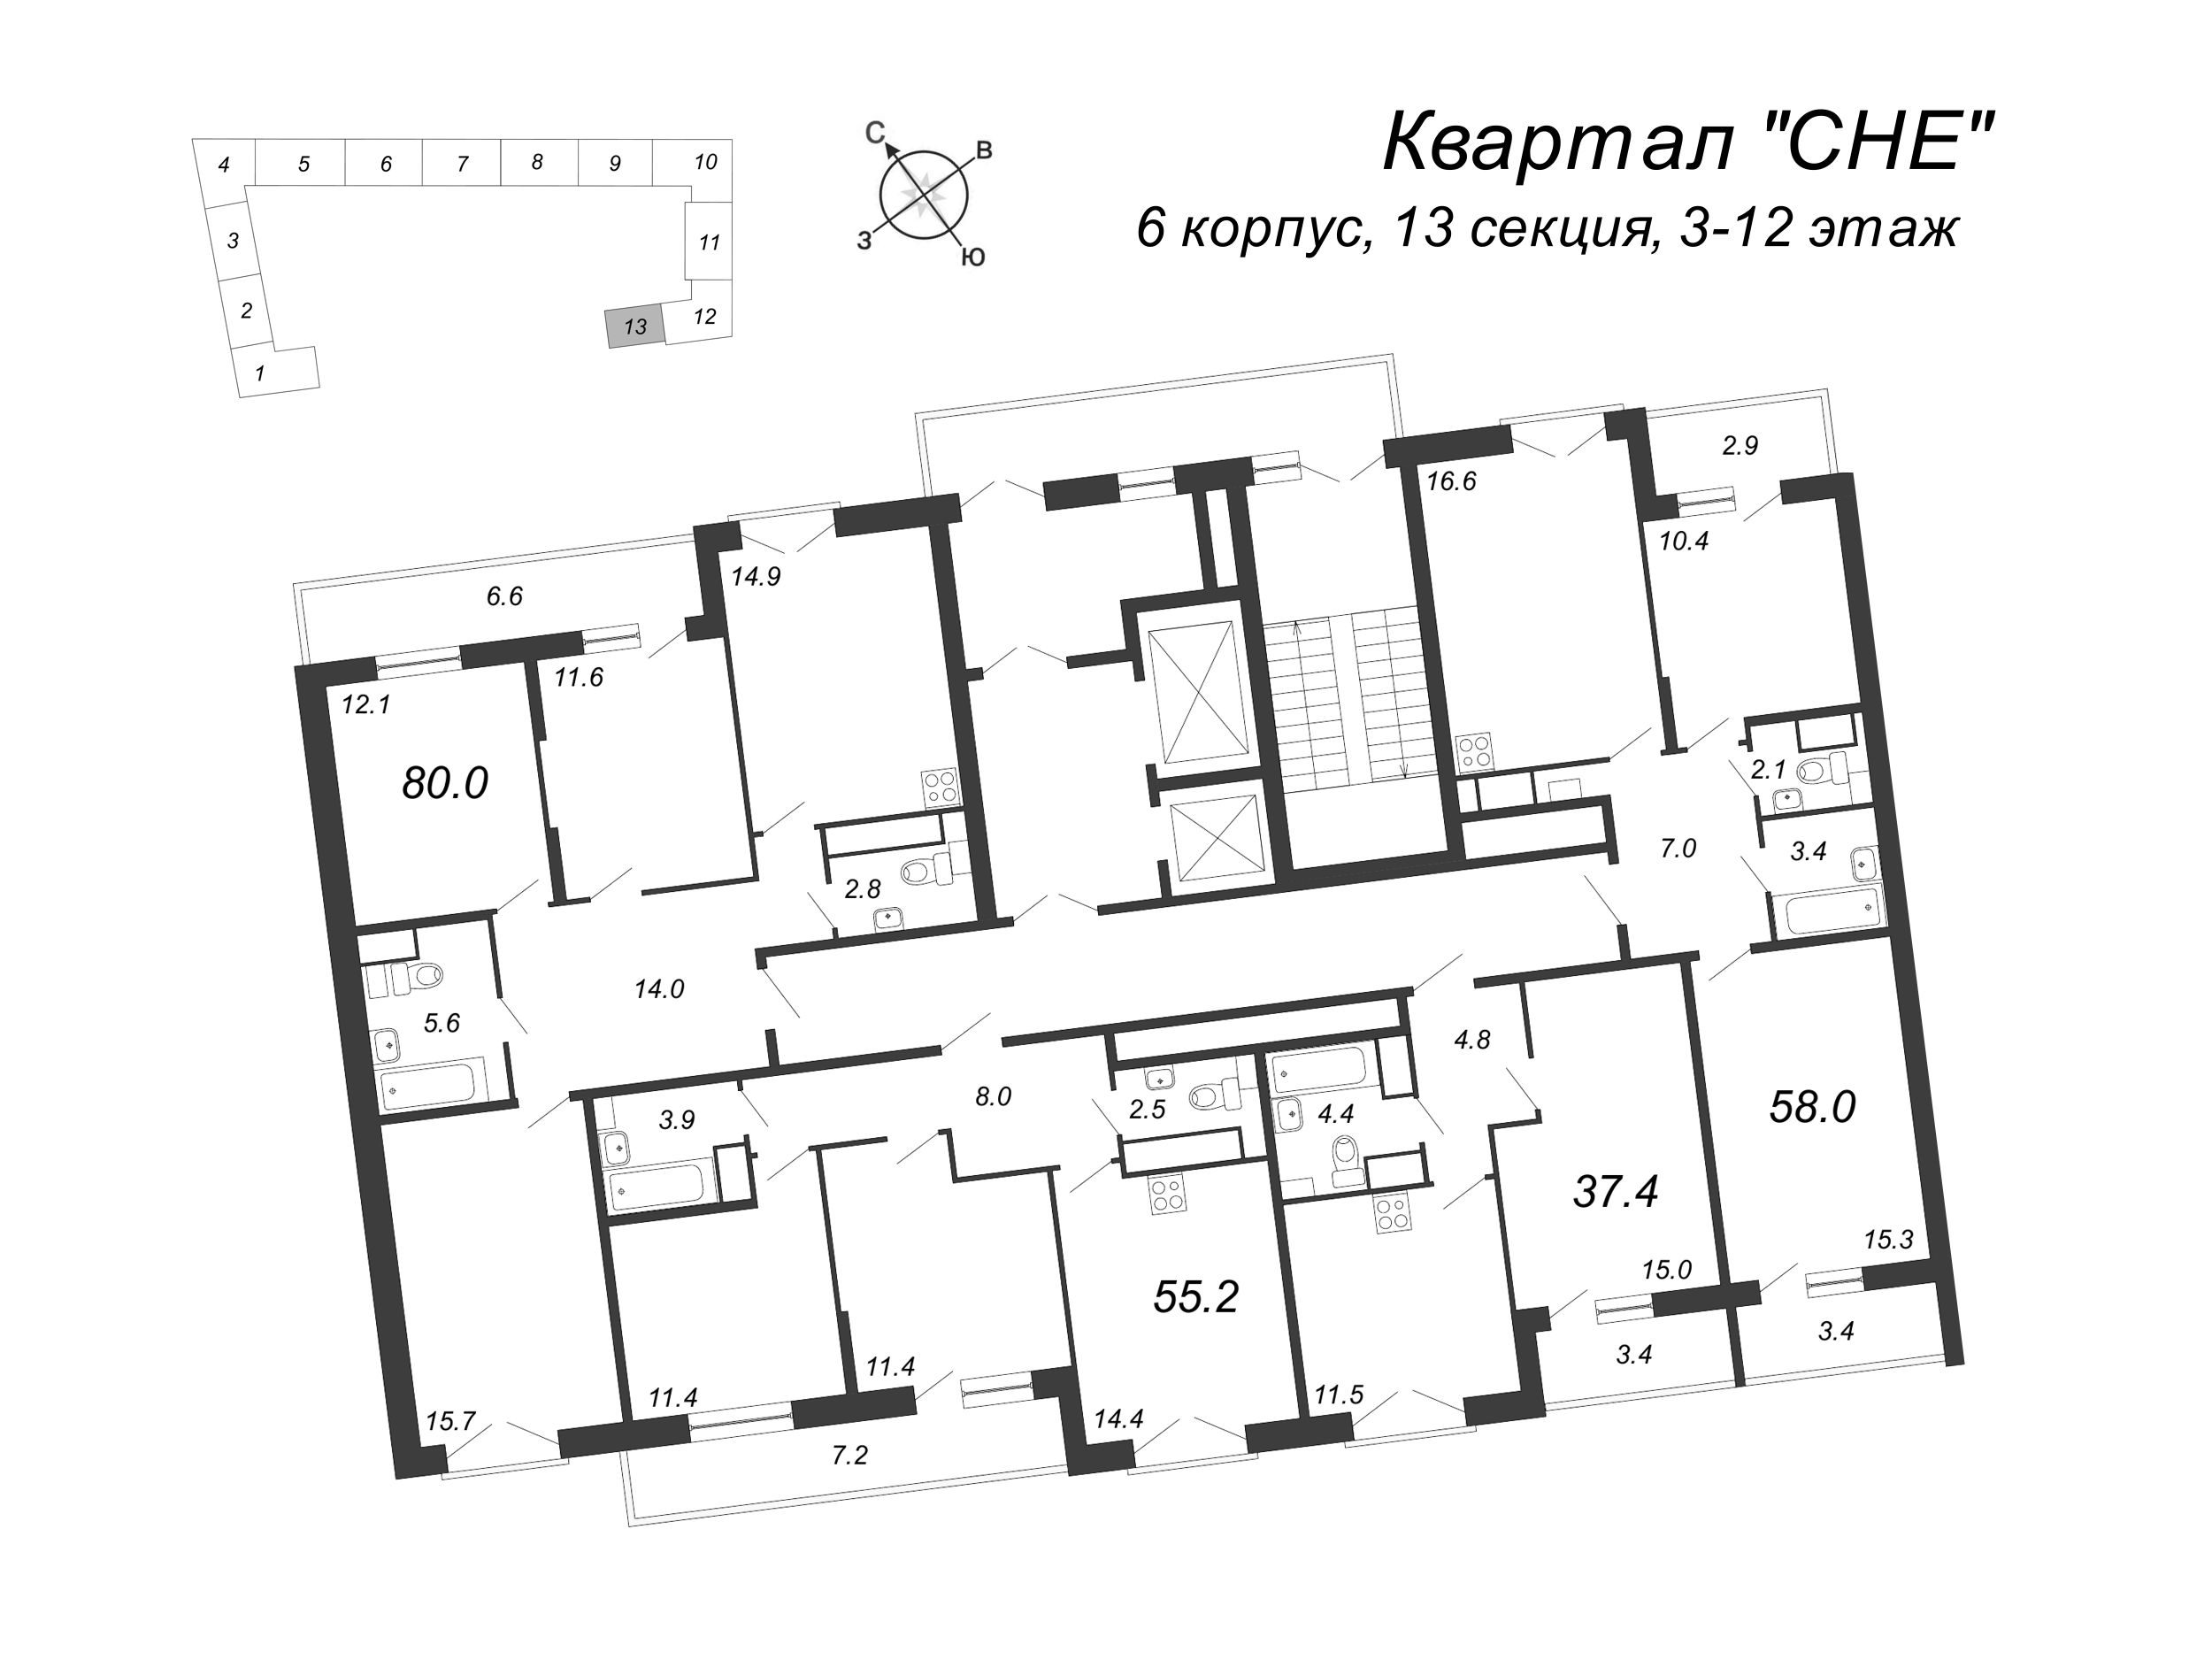 1-комнатная квартира, 37.5 м² в ЖК "Квартал Che" - планировка этажа